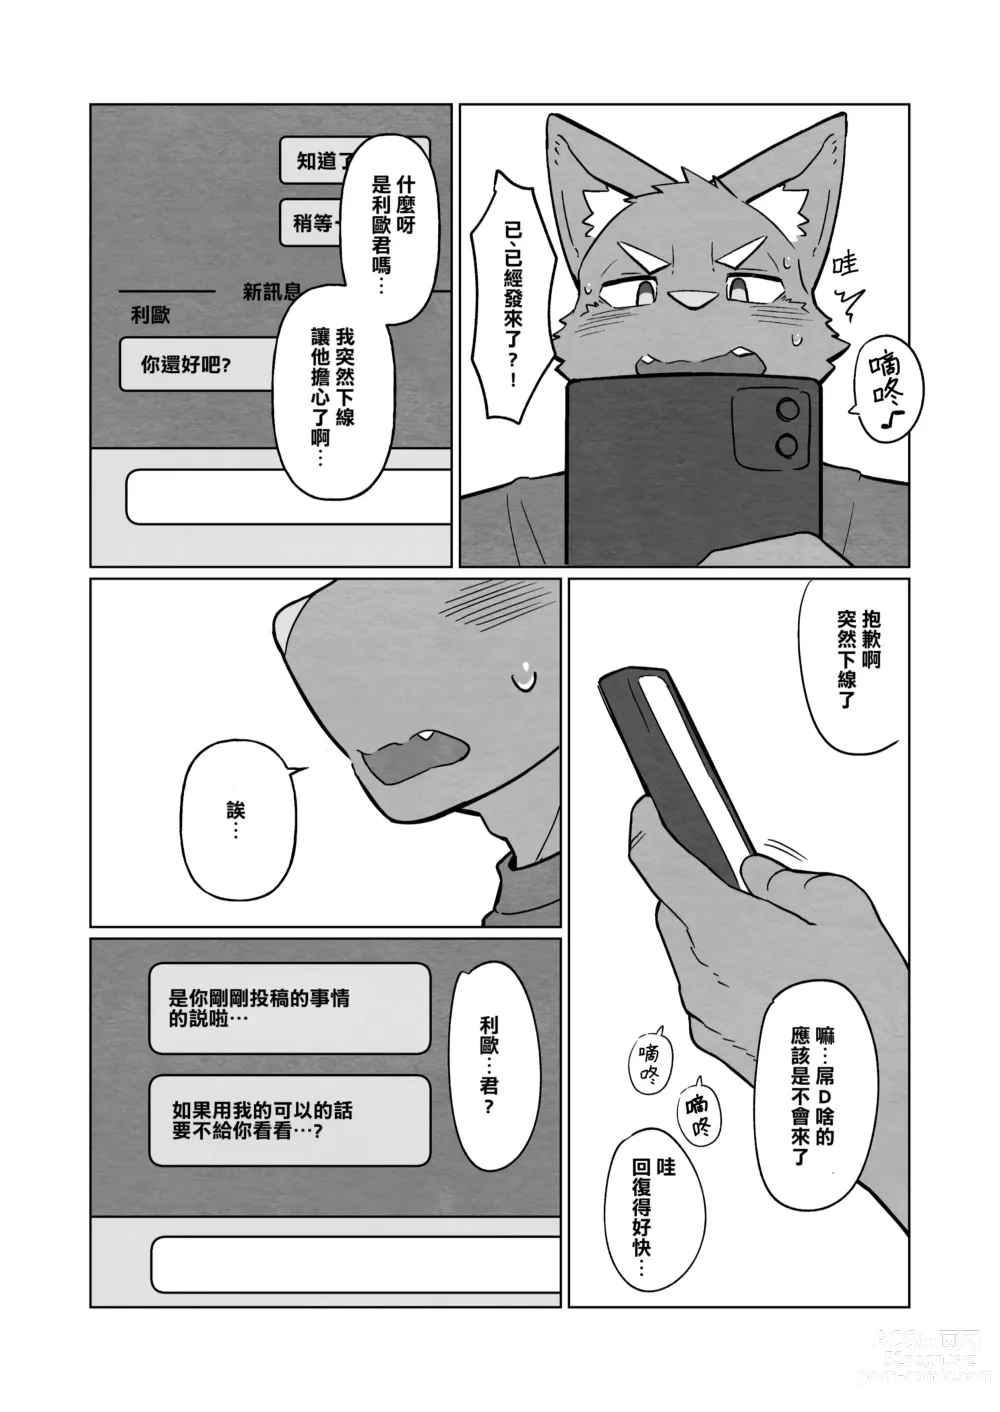 Page 3 of manga 第一次挑战鸡鸡私讯